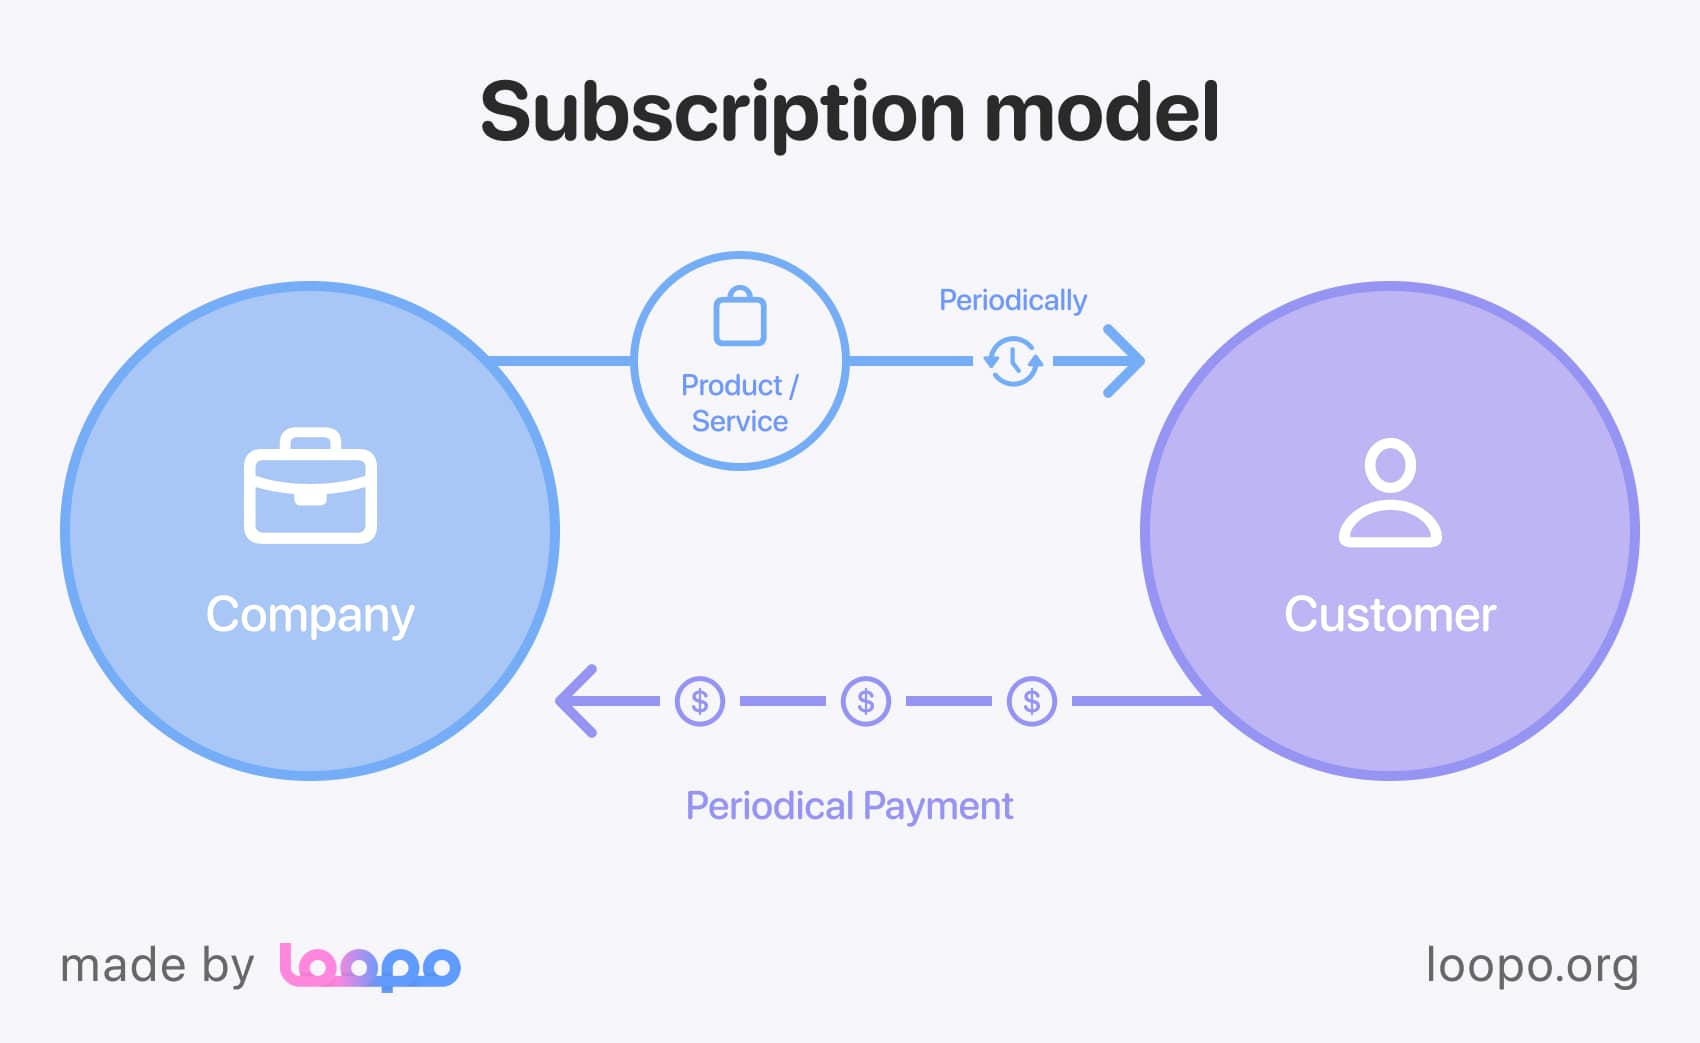 Subscription-based model explained